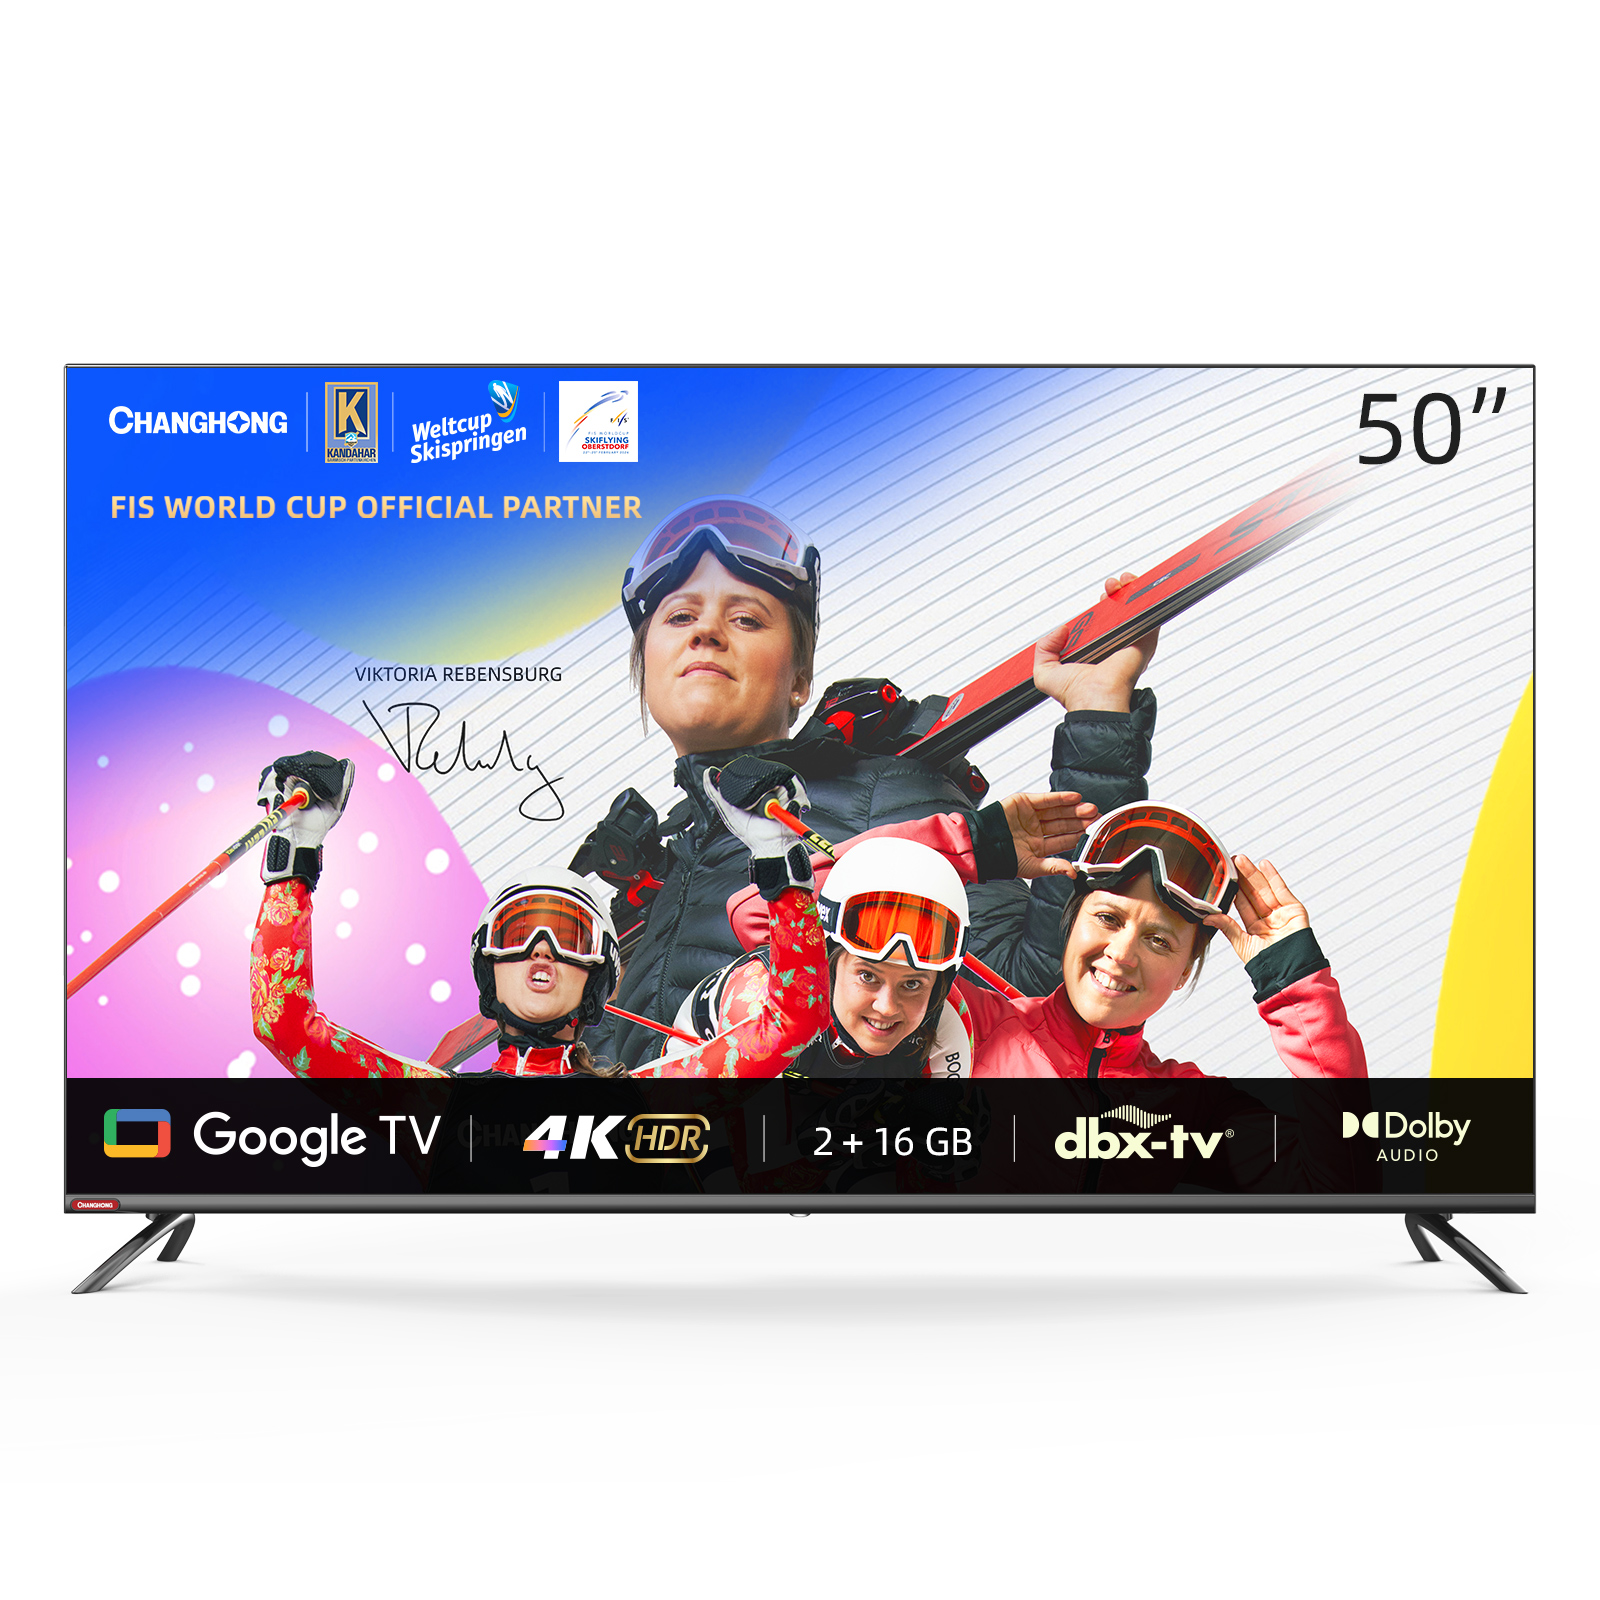 U50H7 PRO - 4K Google TV